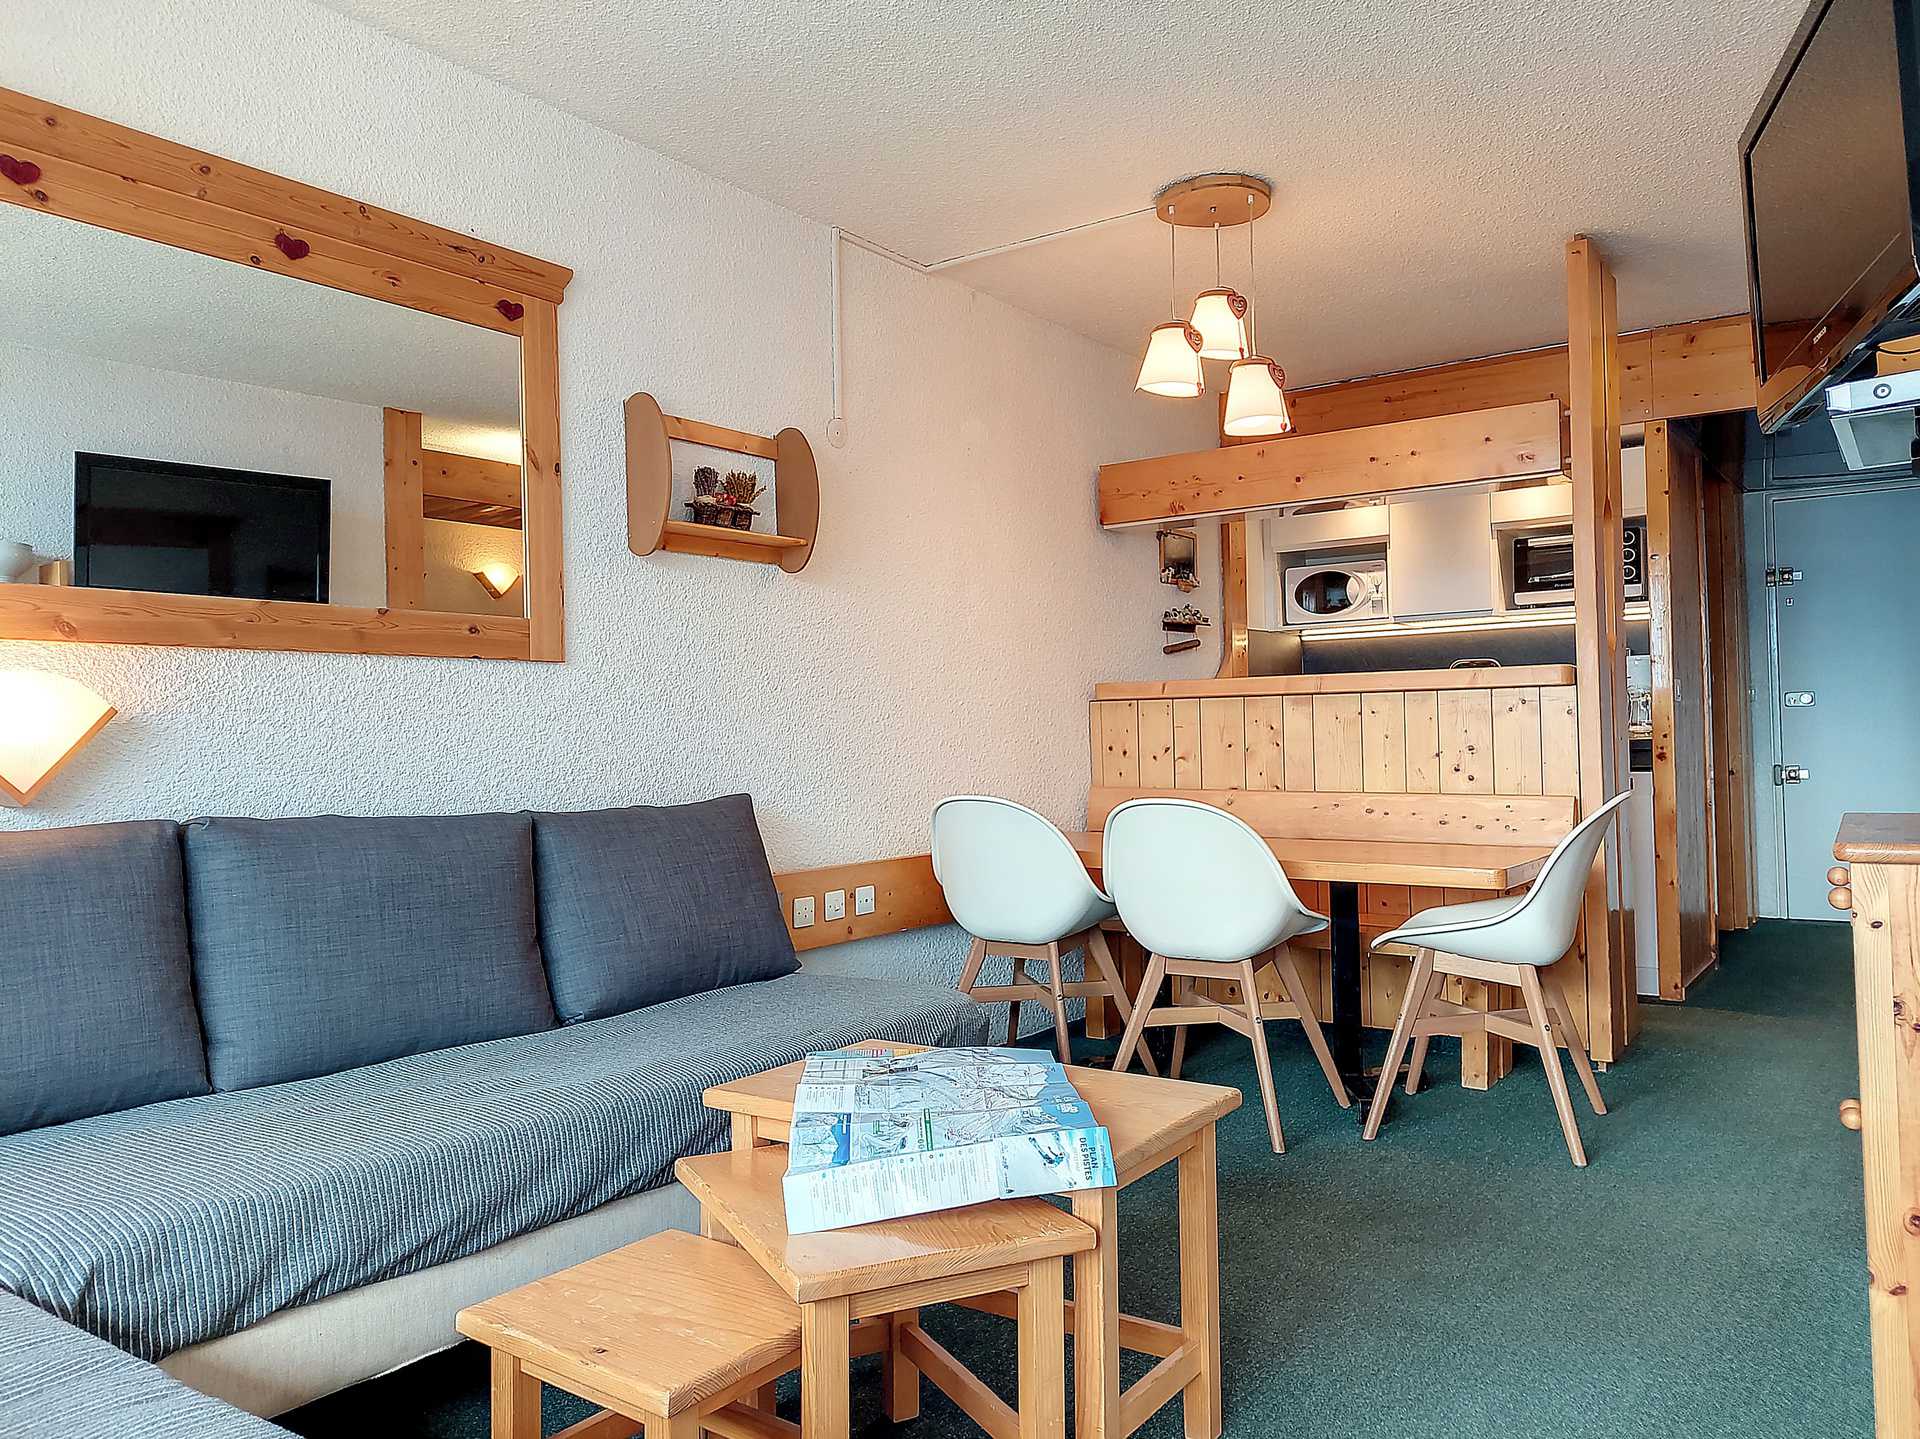 2 rooms 6 people - travelski home choice - Apartements NOVA 2 - Les Arcs 1800